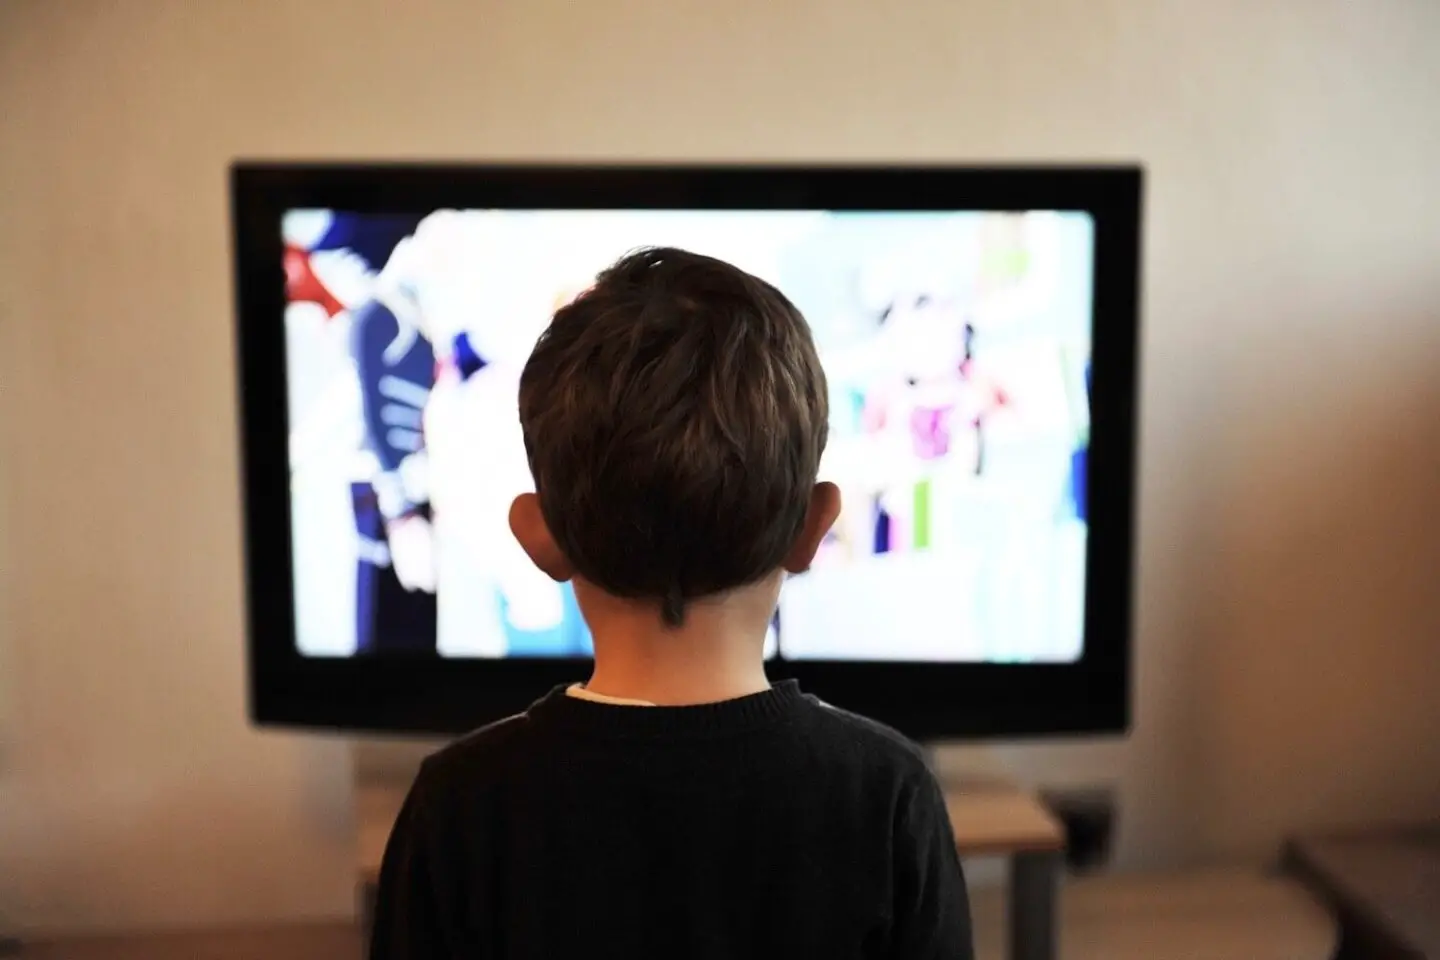 A child facing a TV screen